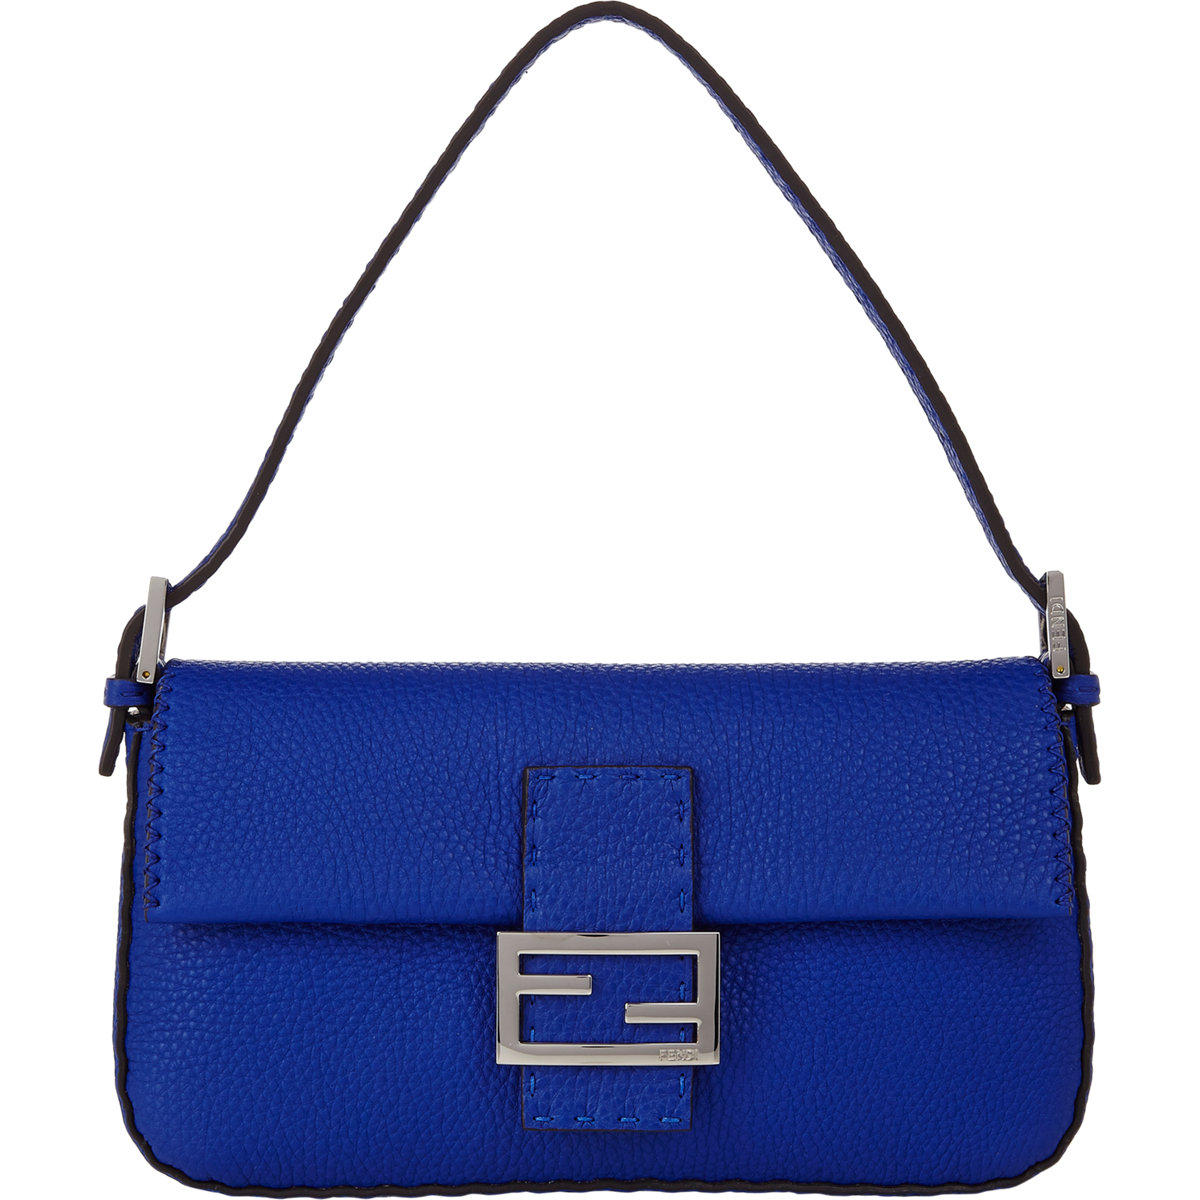 Lyst - Fendi Selleria Baguette Bag in Blue